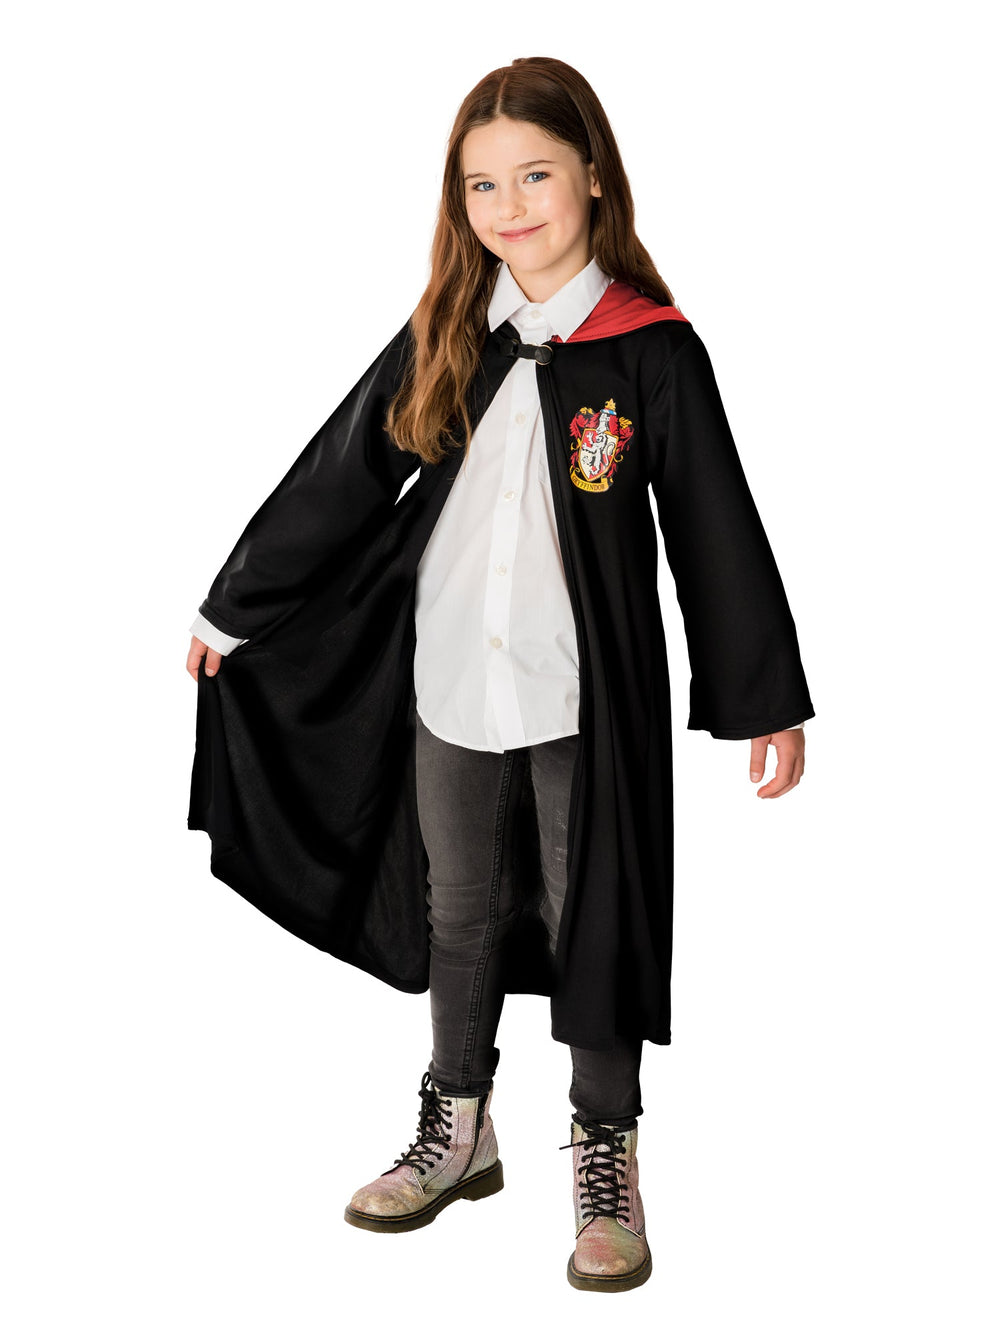 Gryffindor Robe for Kids Costume Harry Potter_2